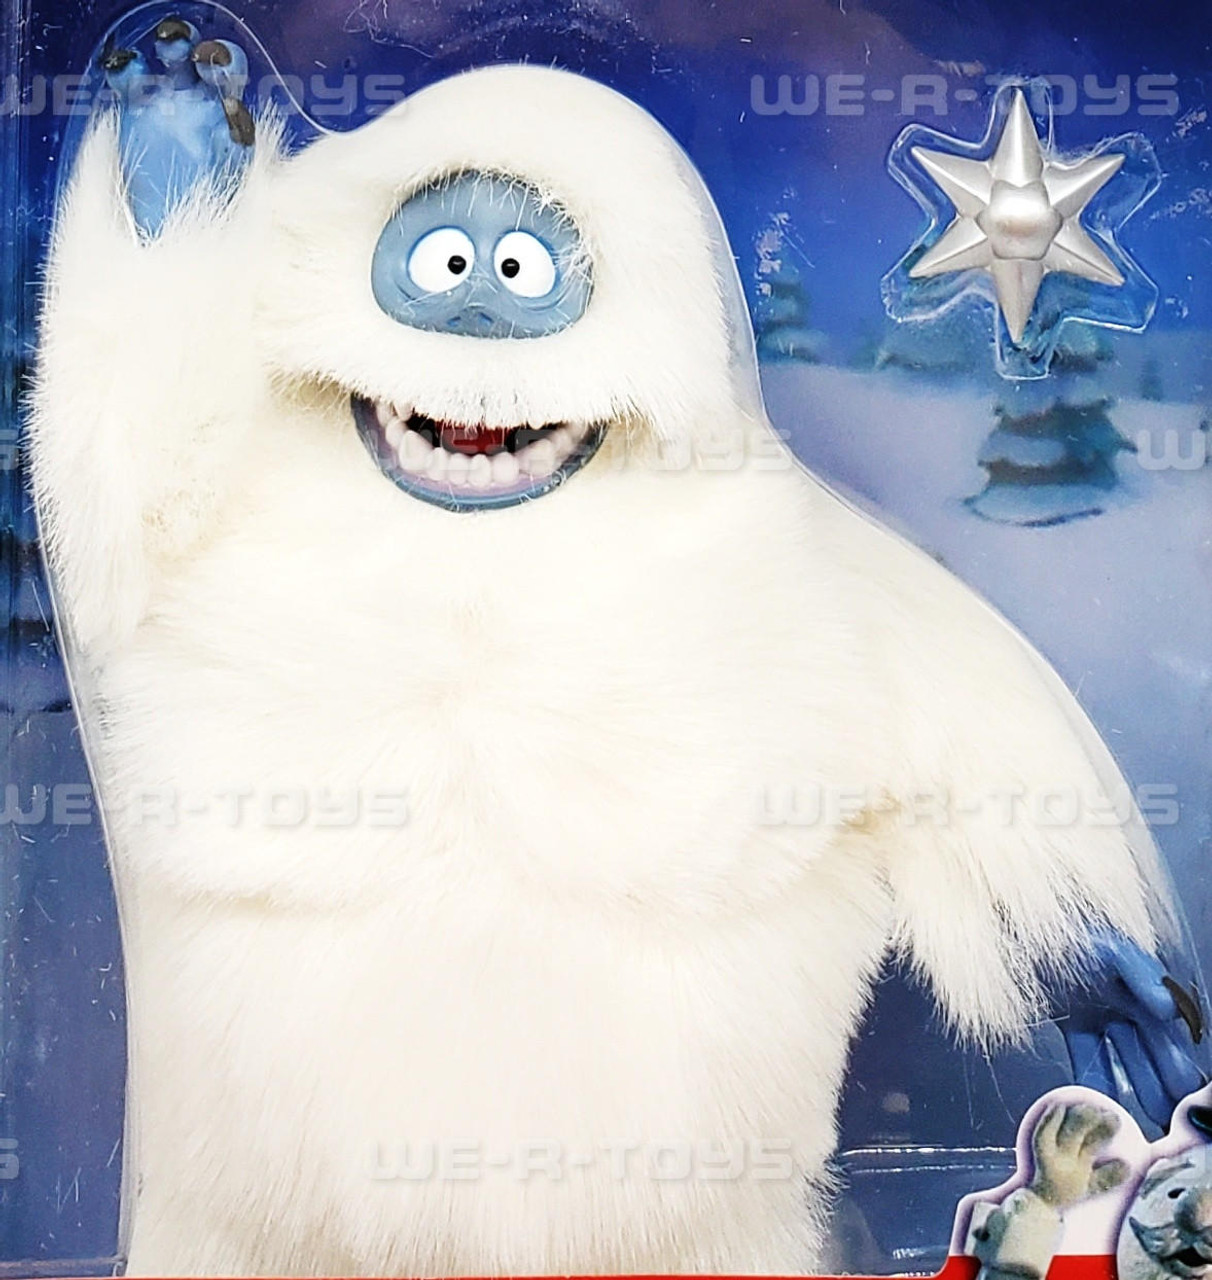 Toys R Us Exclusive YETI Abominable Snowman 15 Figure Maidenhead Rare